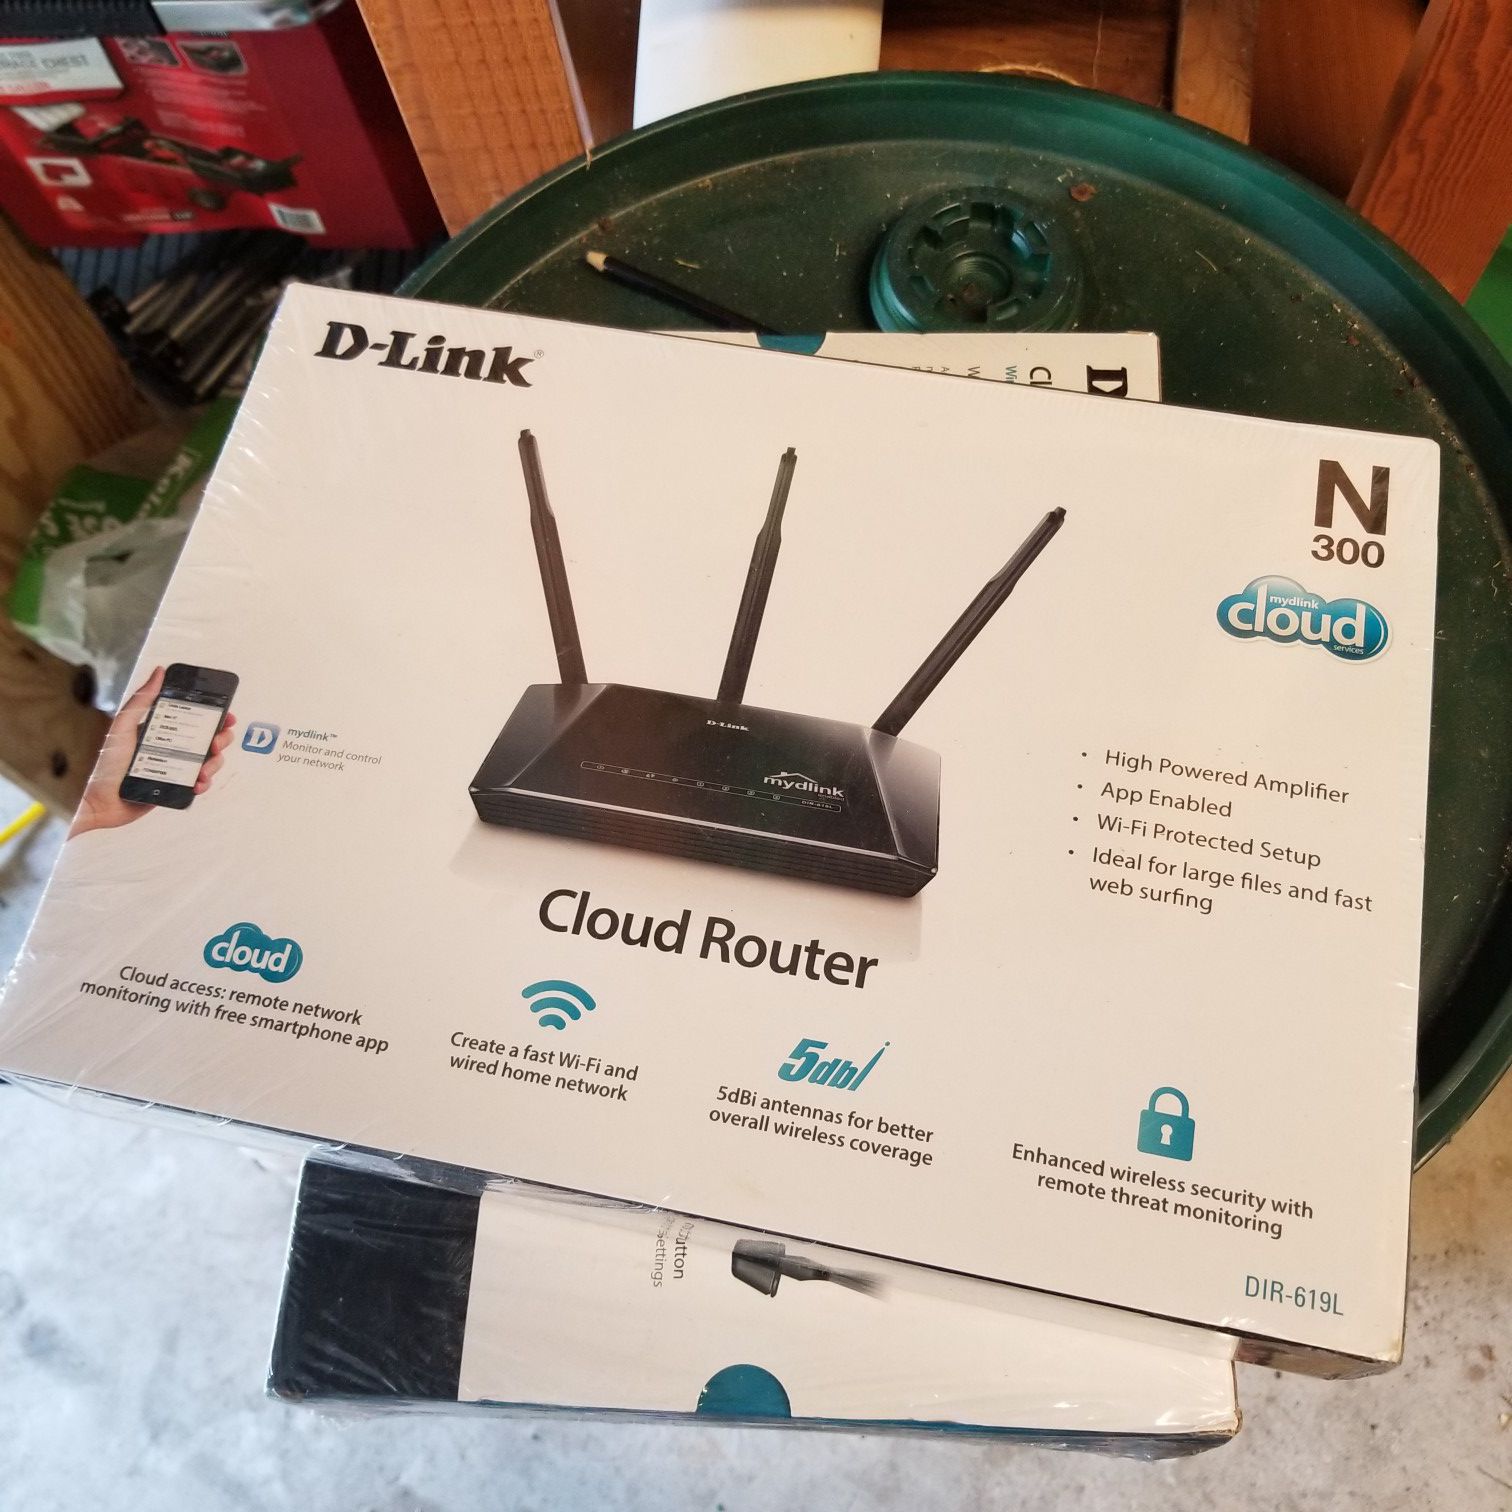 D-Link n300 router